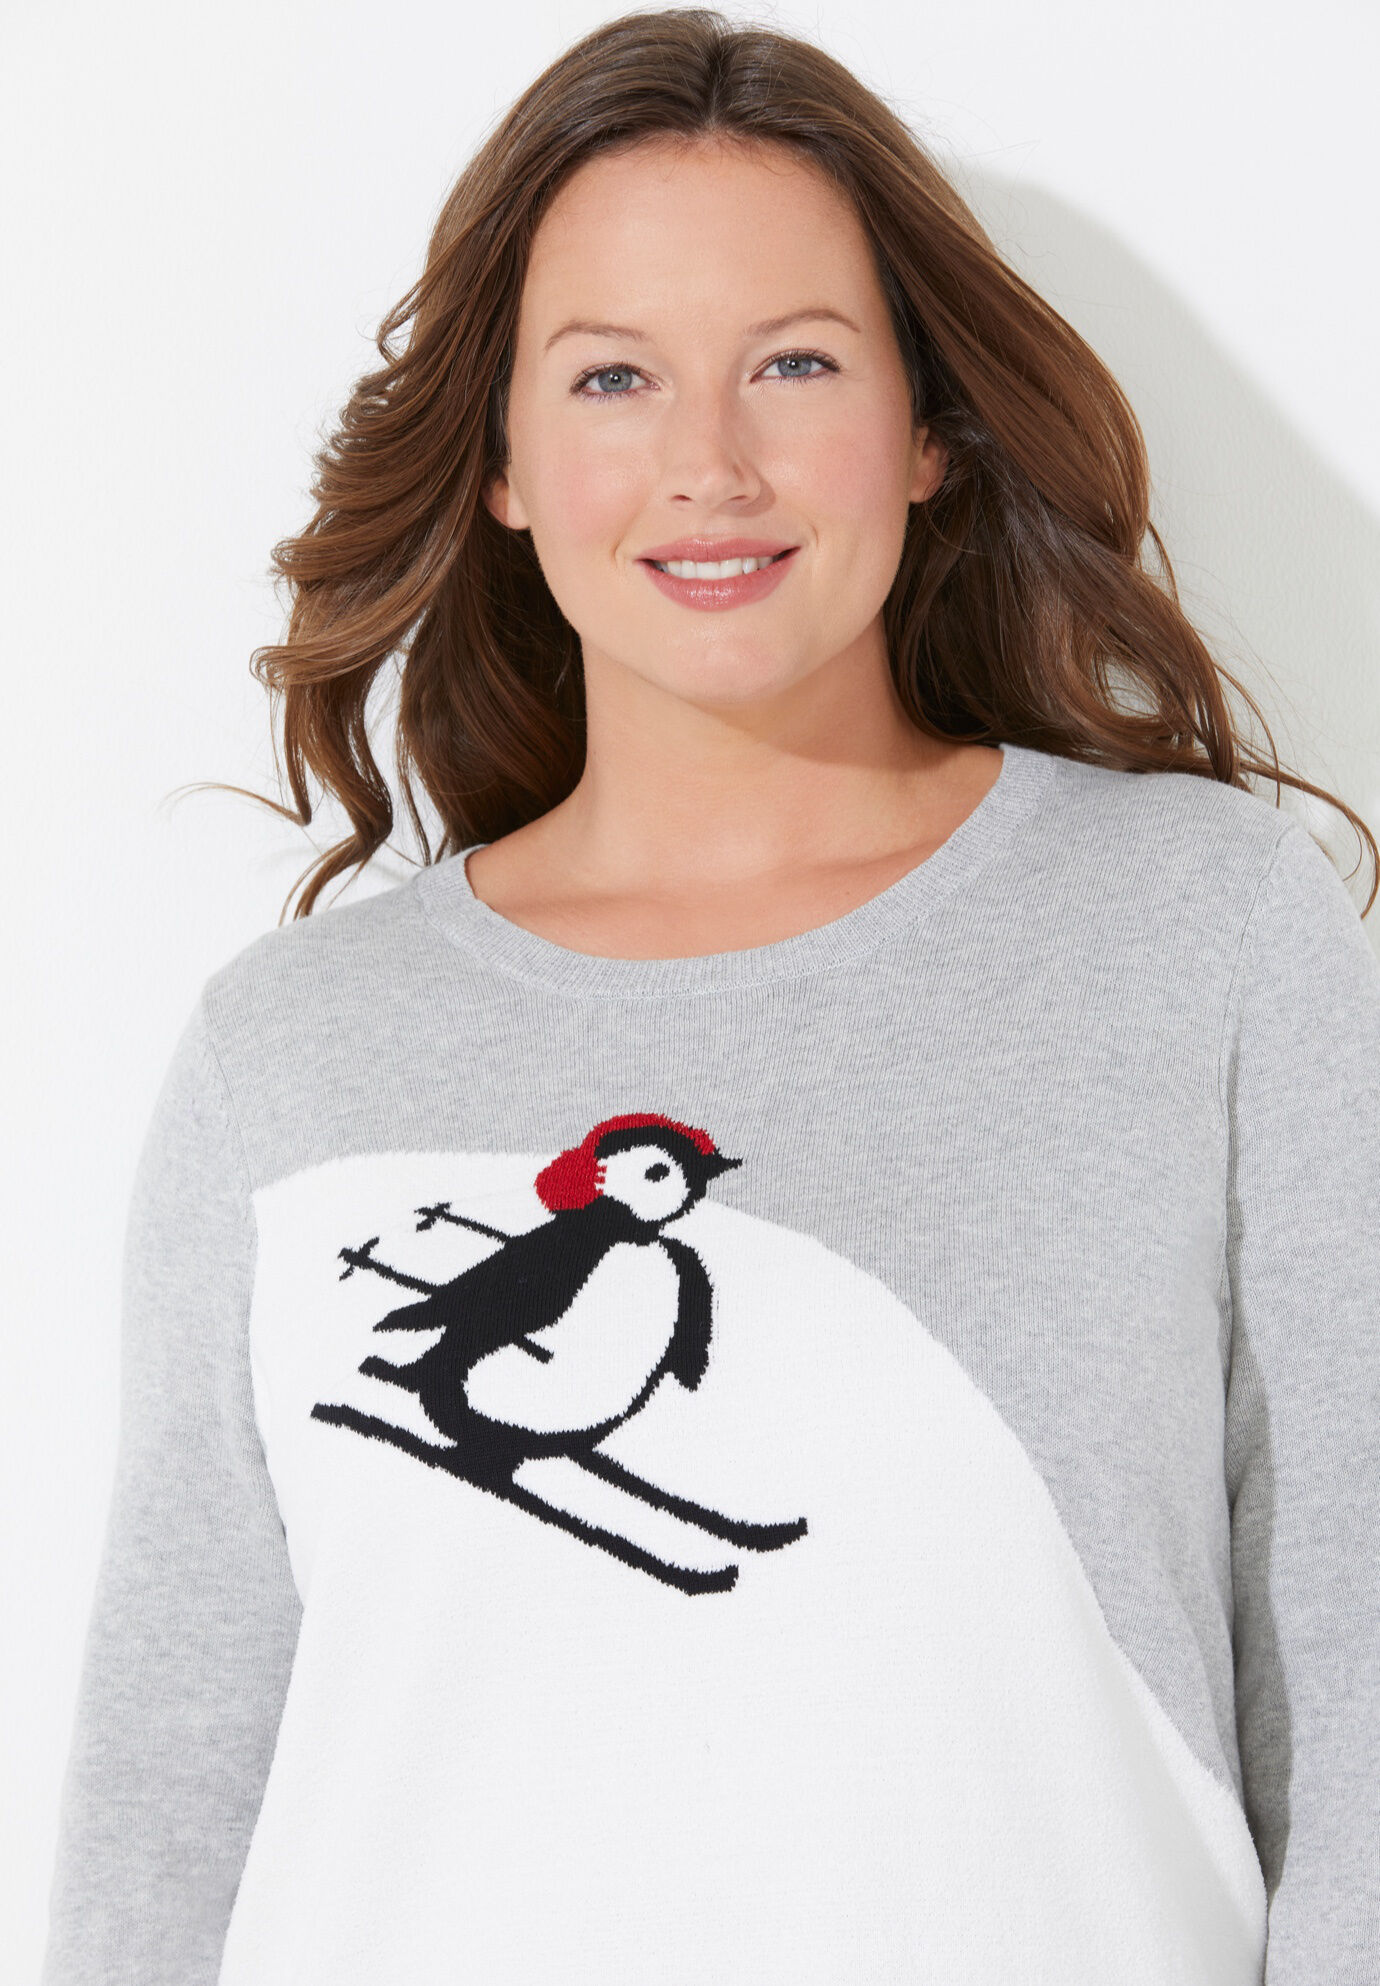 Penguin Sweater Women